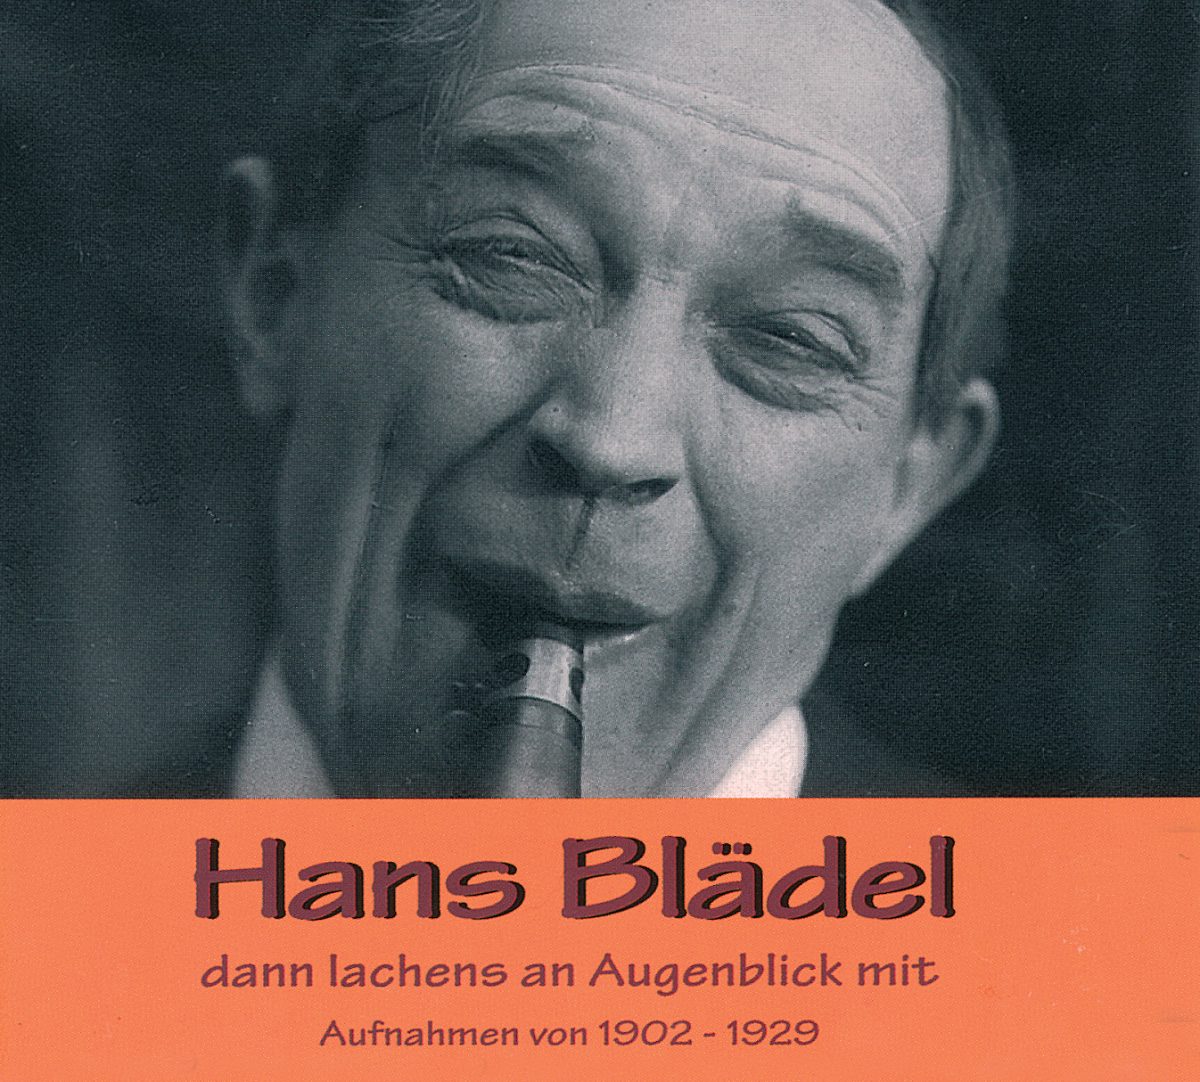 Rare Schellacks - Hans Blädel - Dann lachens an Augenblick mit / 1902-1929